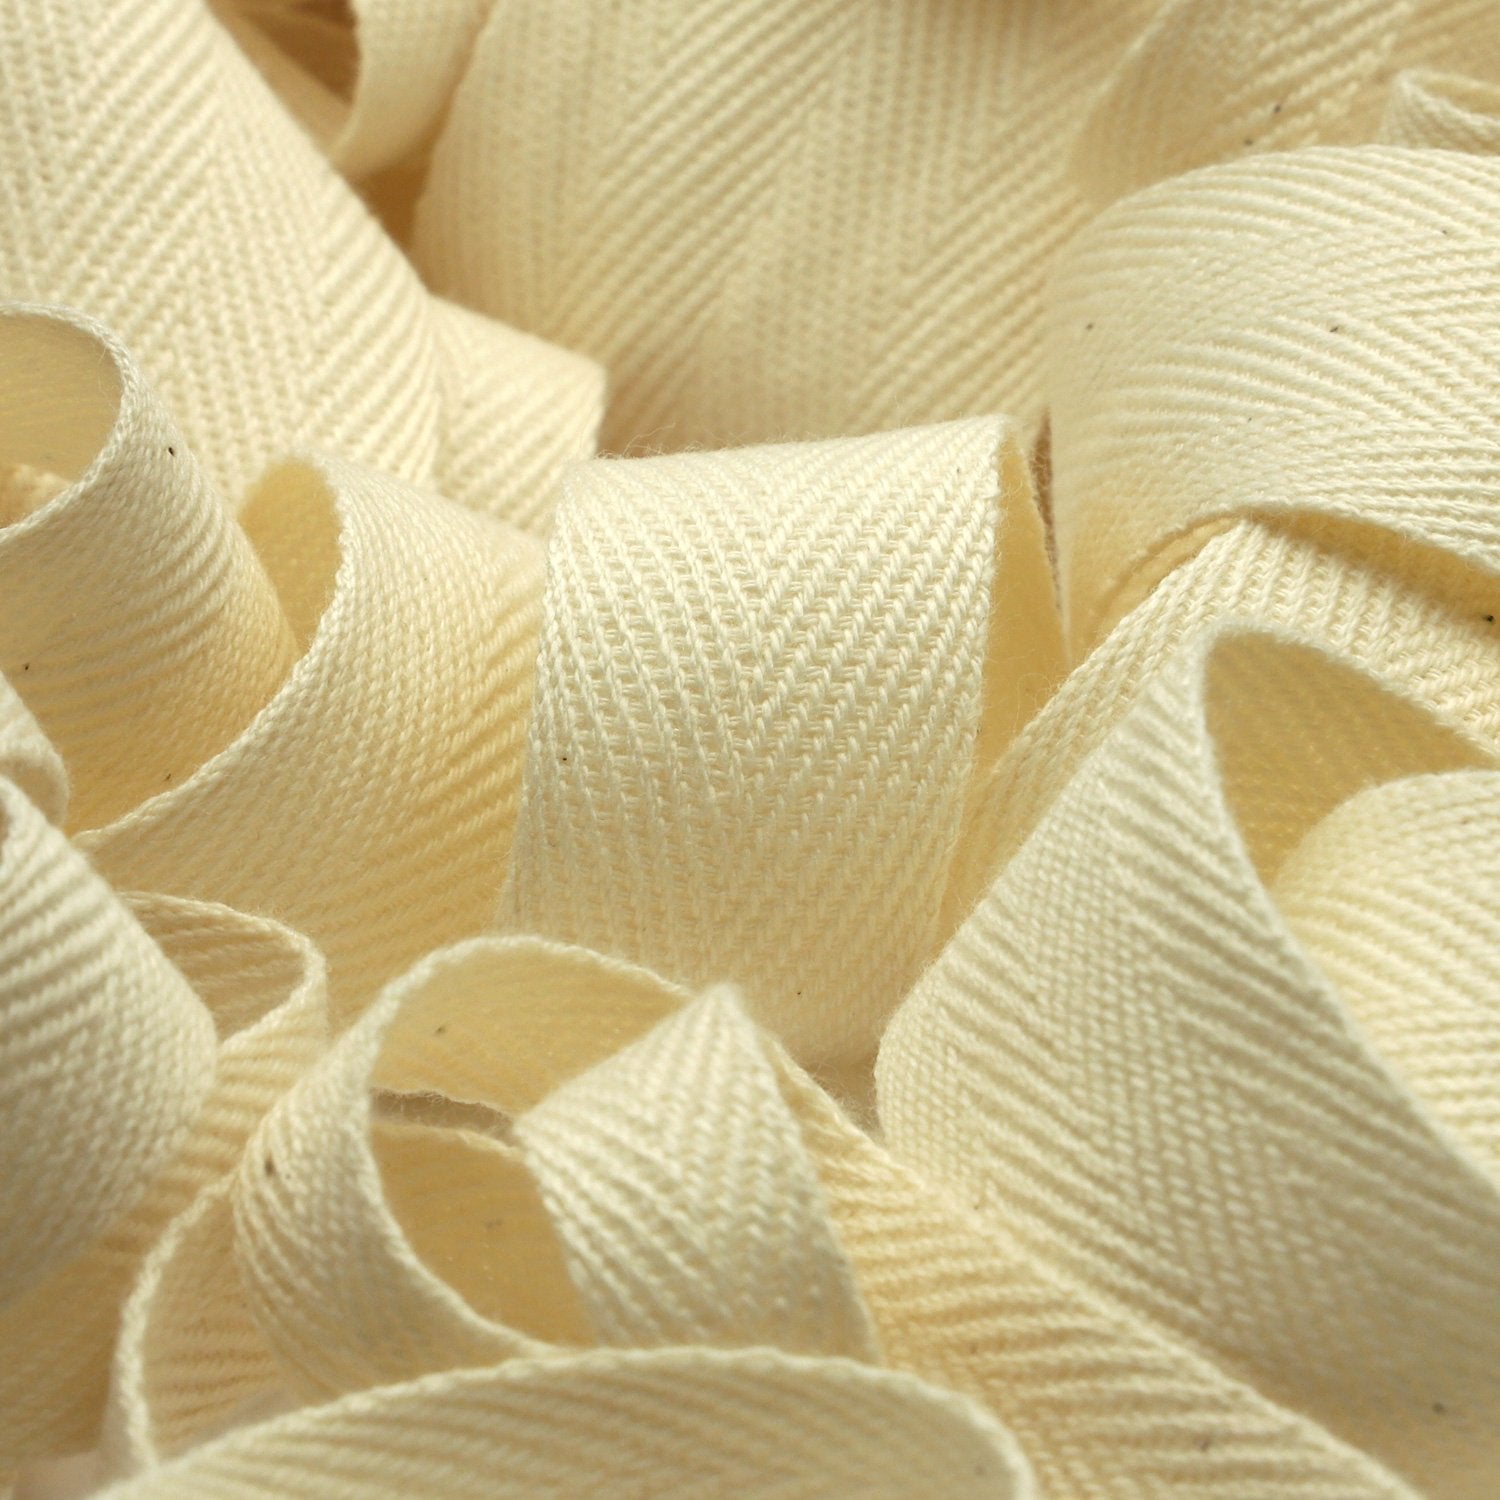 FUJIYAMA RIBBON Organic Cotton Herringbone Ribbon 25mm Ecru 9.14 Meters Roll